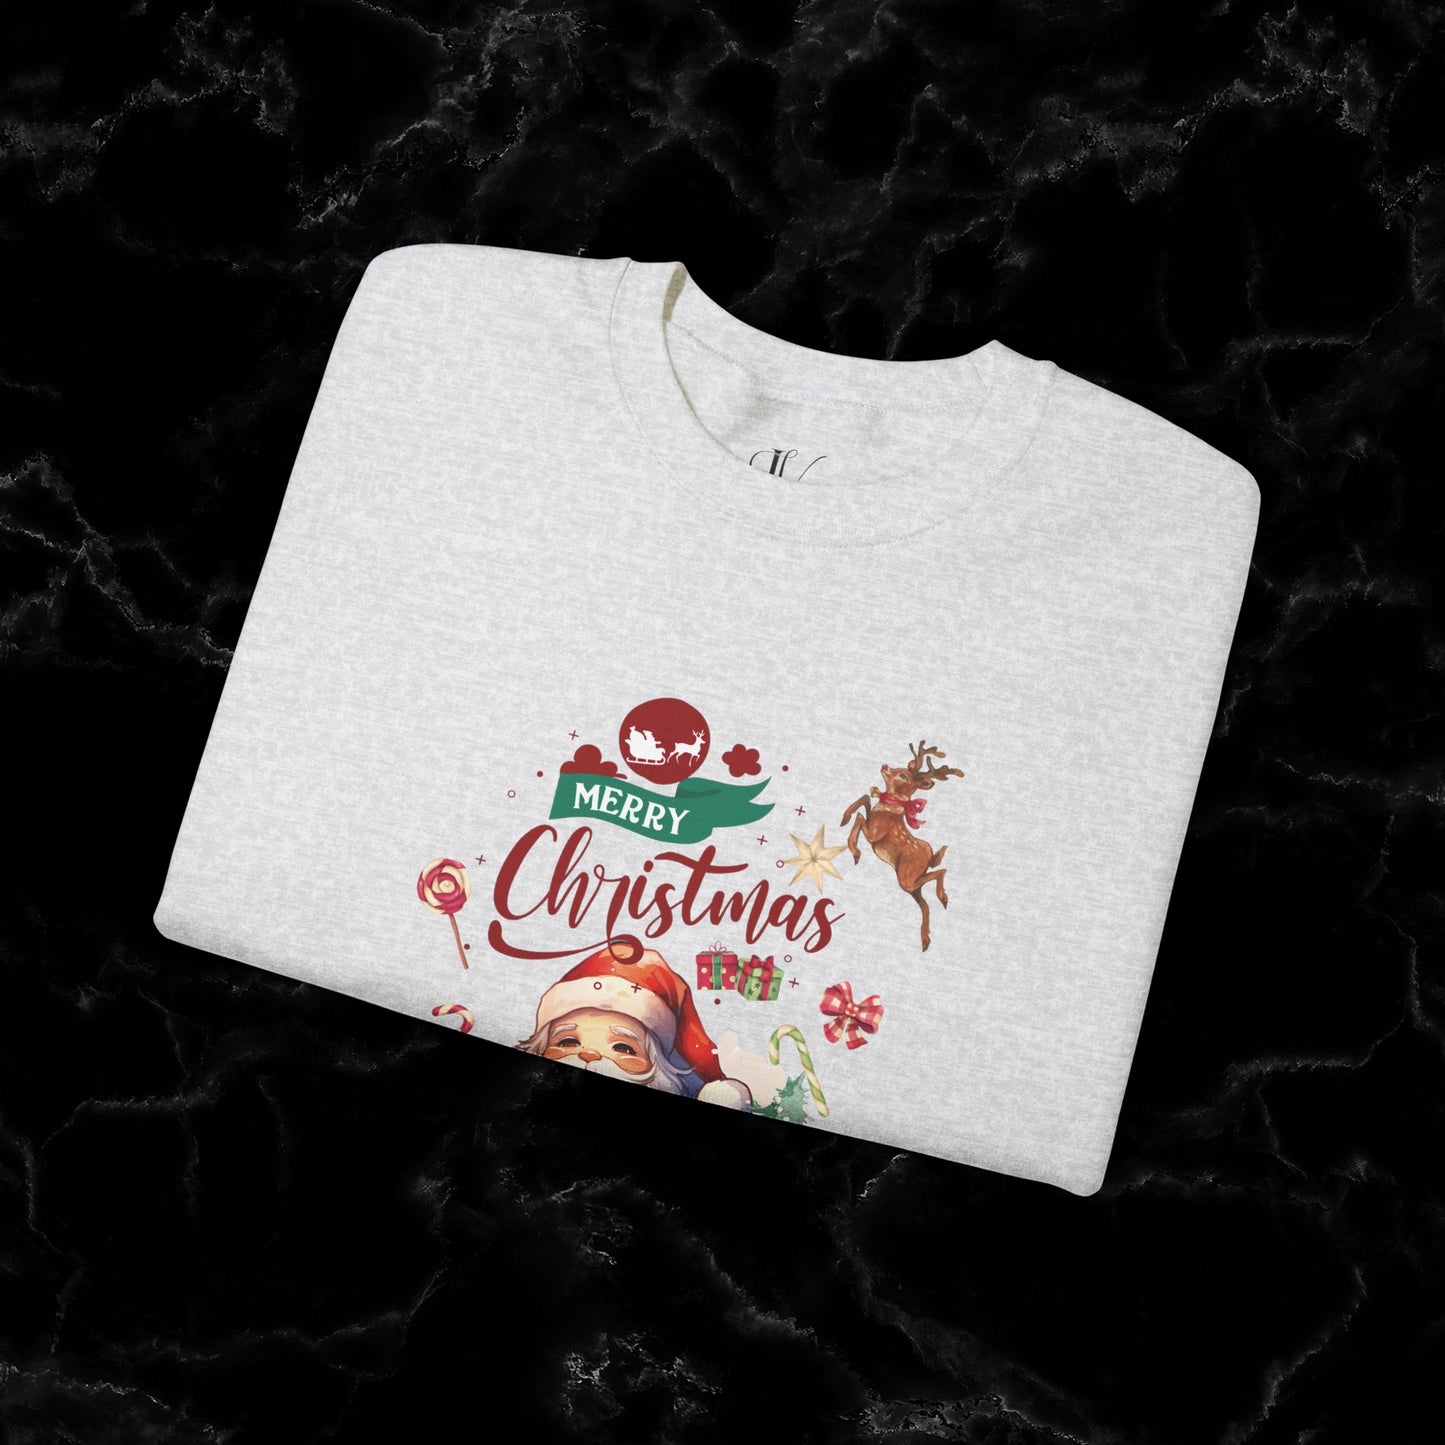 Merry Christmas Sweatshirt | Christmas Shirt - Matching Christmas Shirt - Santa Claus Merry Christmas Sweatshirt - Holiday Gift - Christmas Gift Sweatshirt   